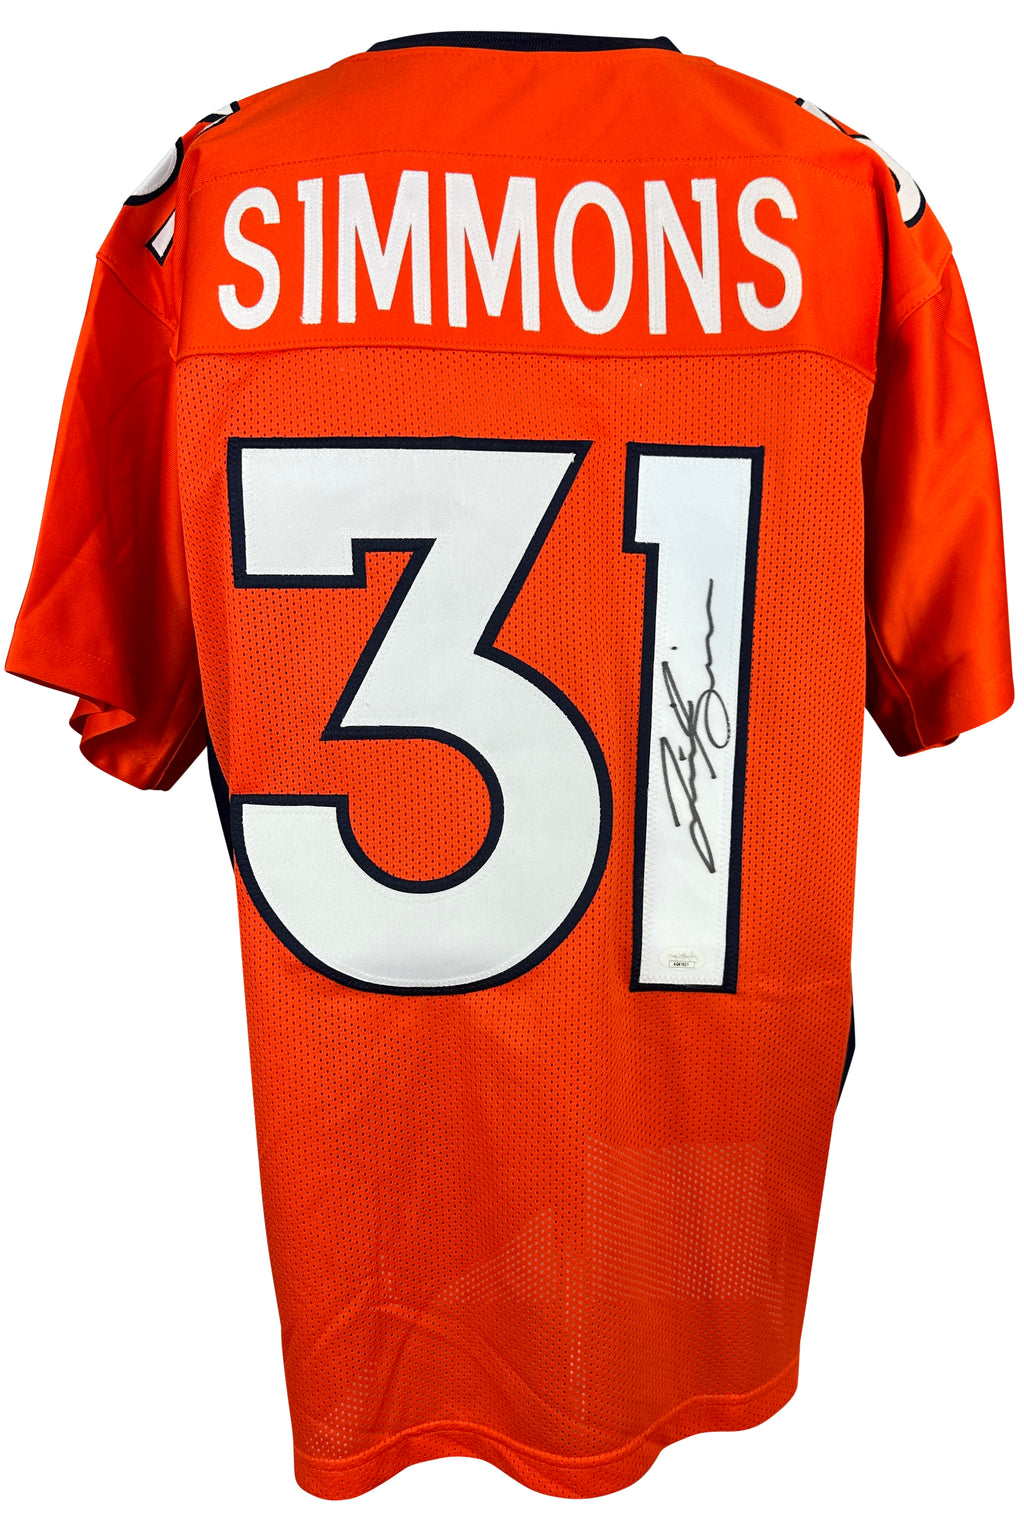 Justin Simmons autographed signed jersey Orange pro style JSA COA